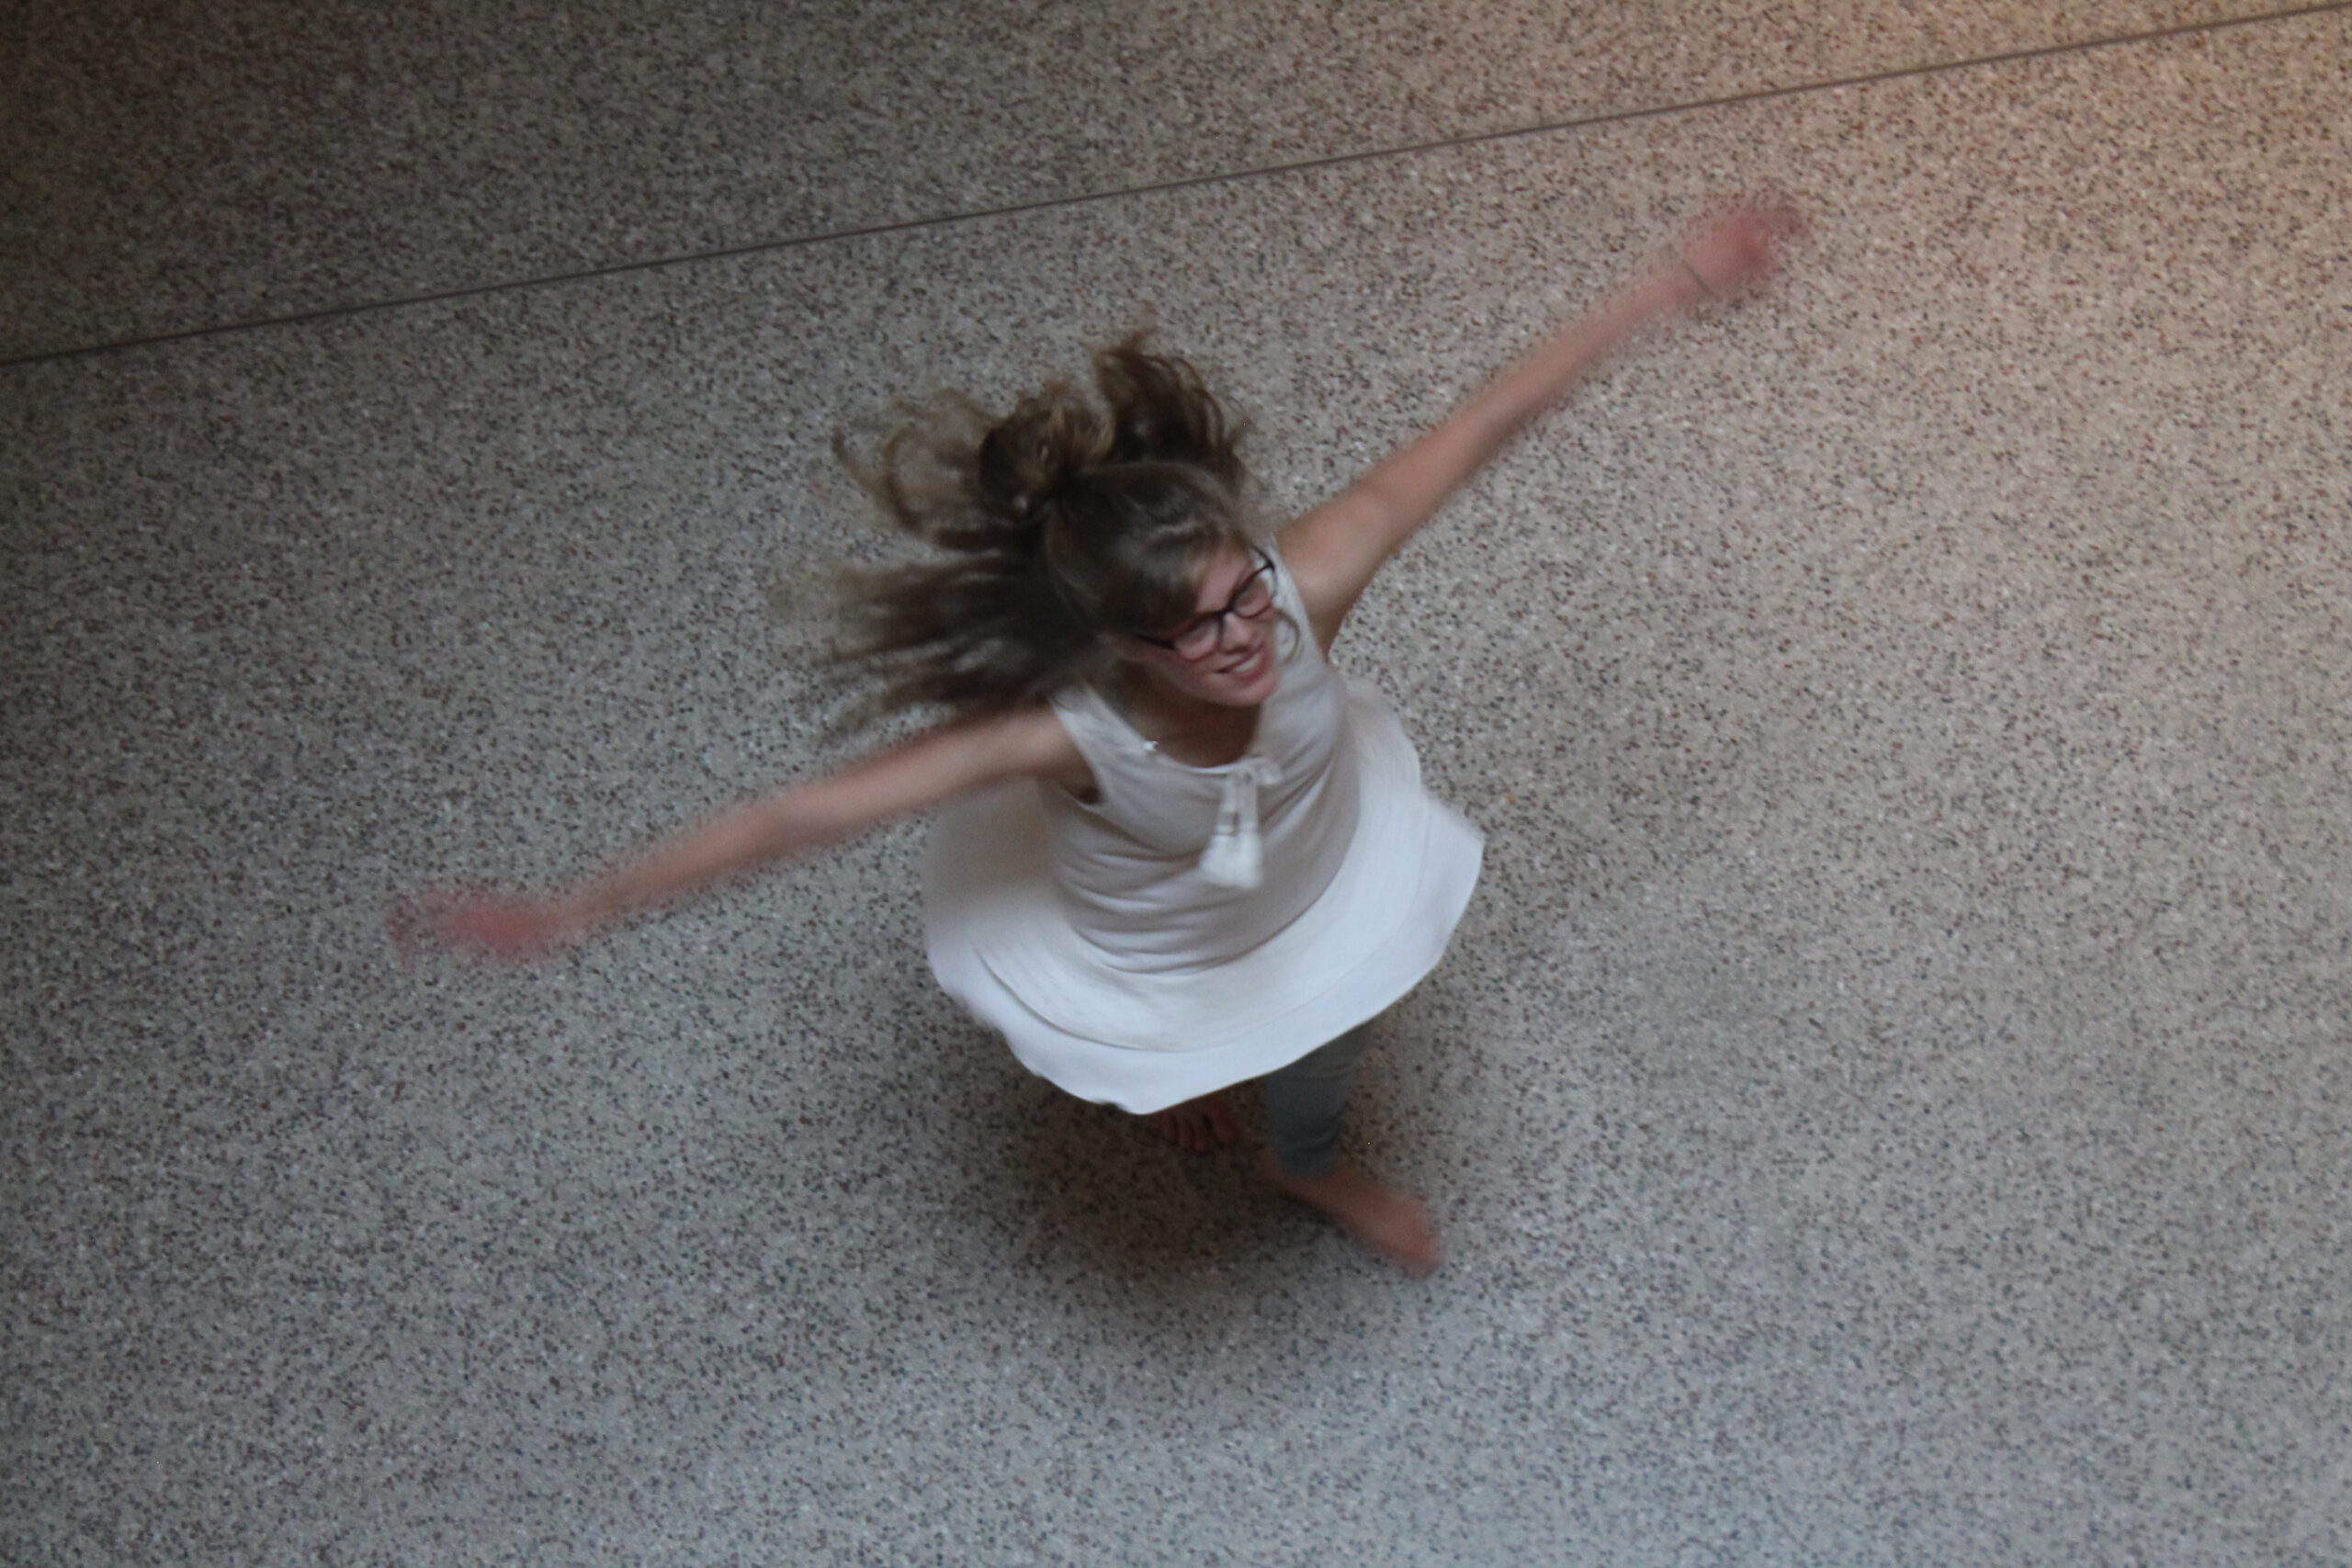 Szene aus dem Tanzfilm "tanzwärts"